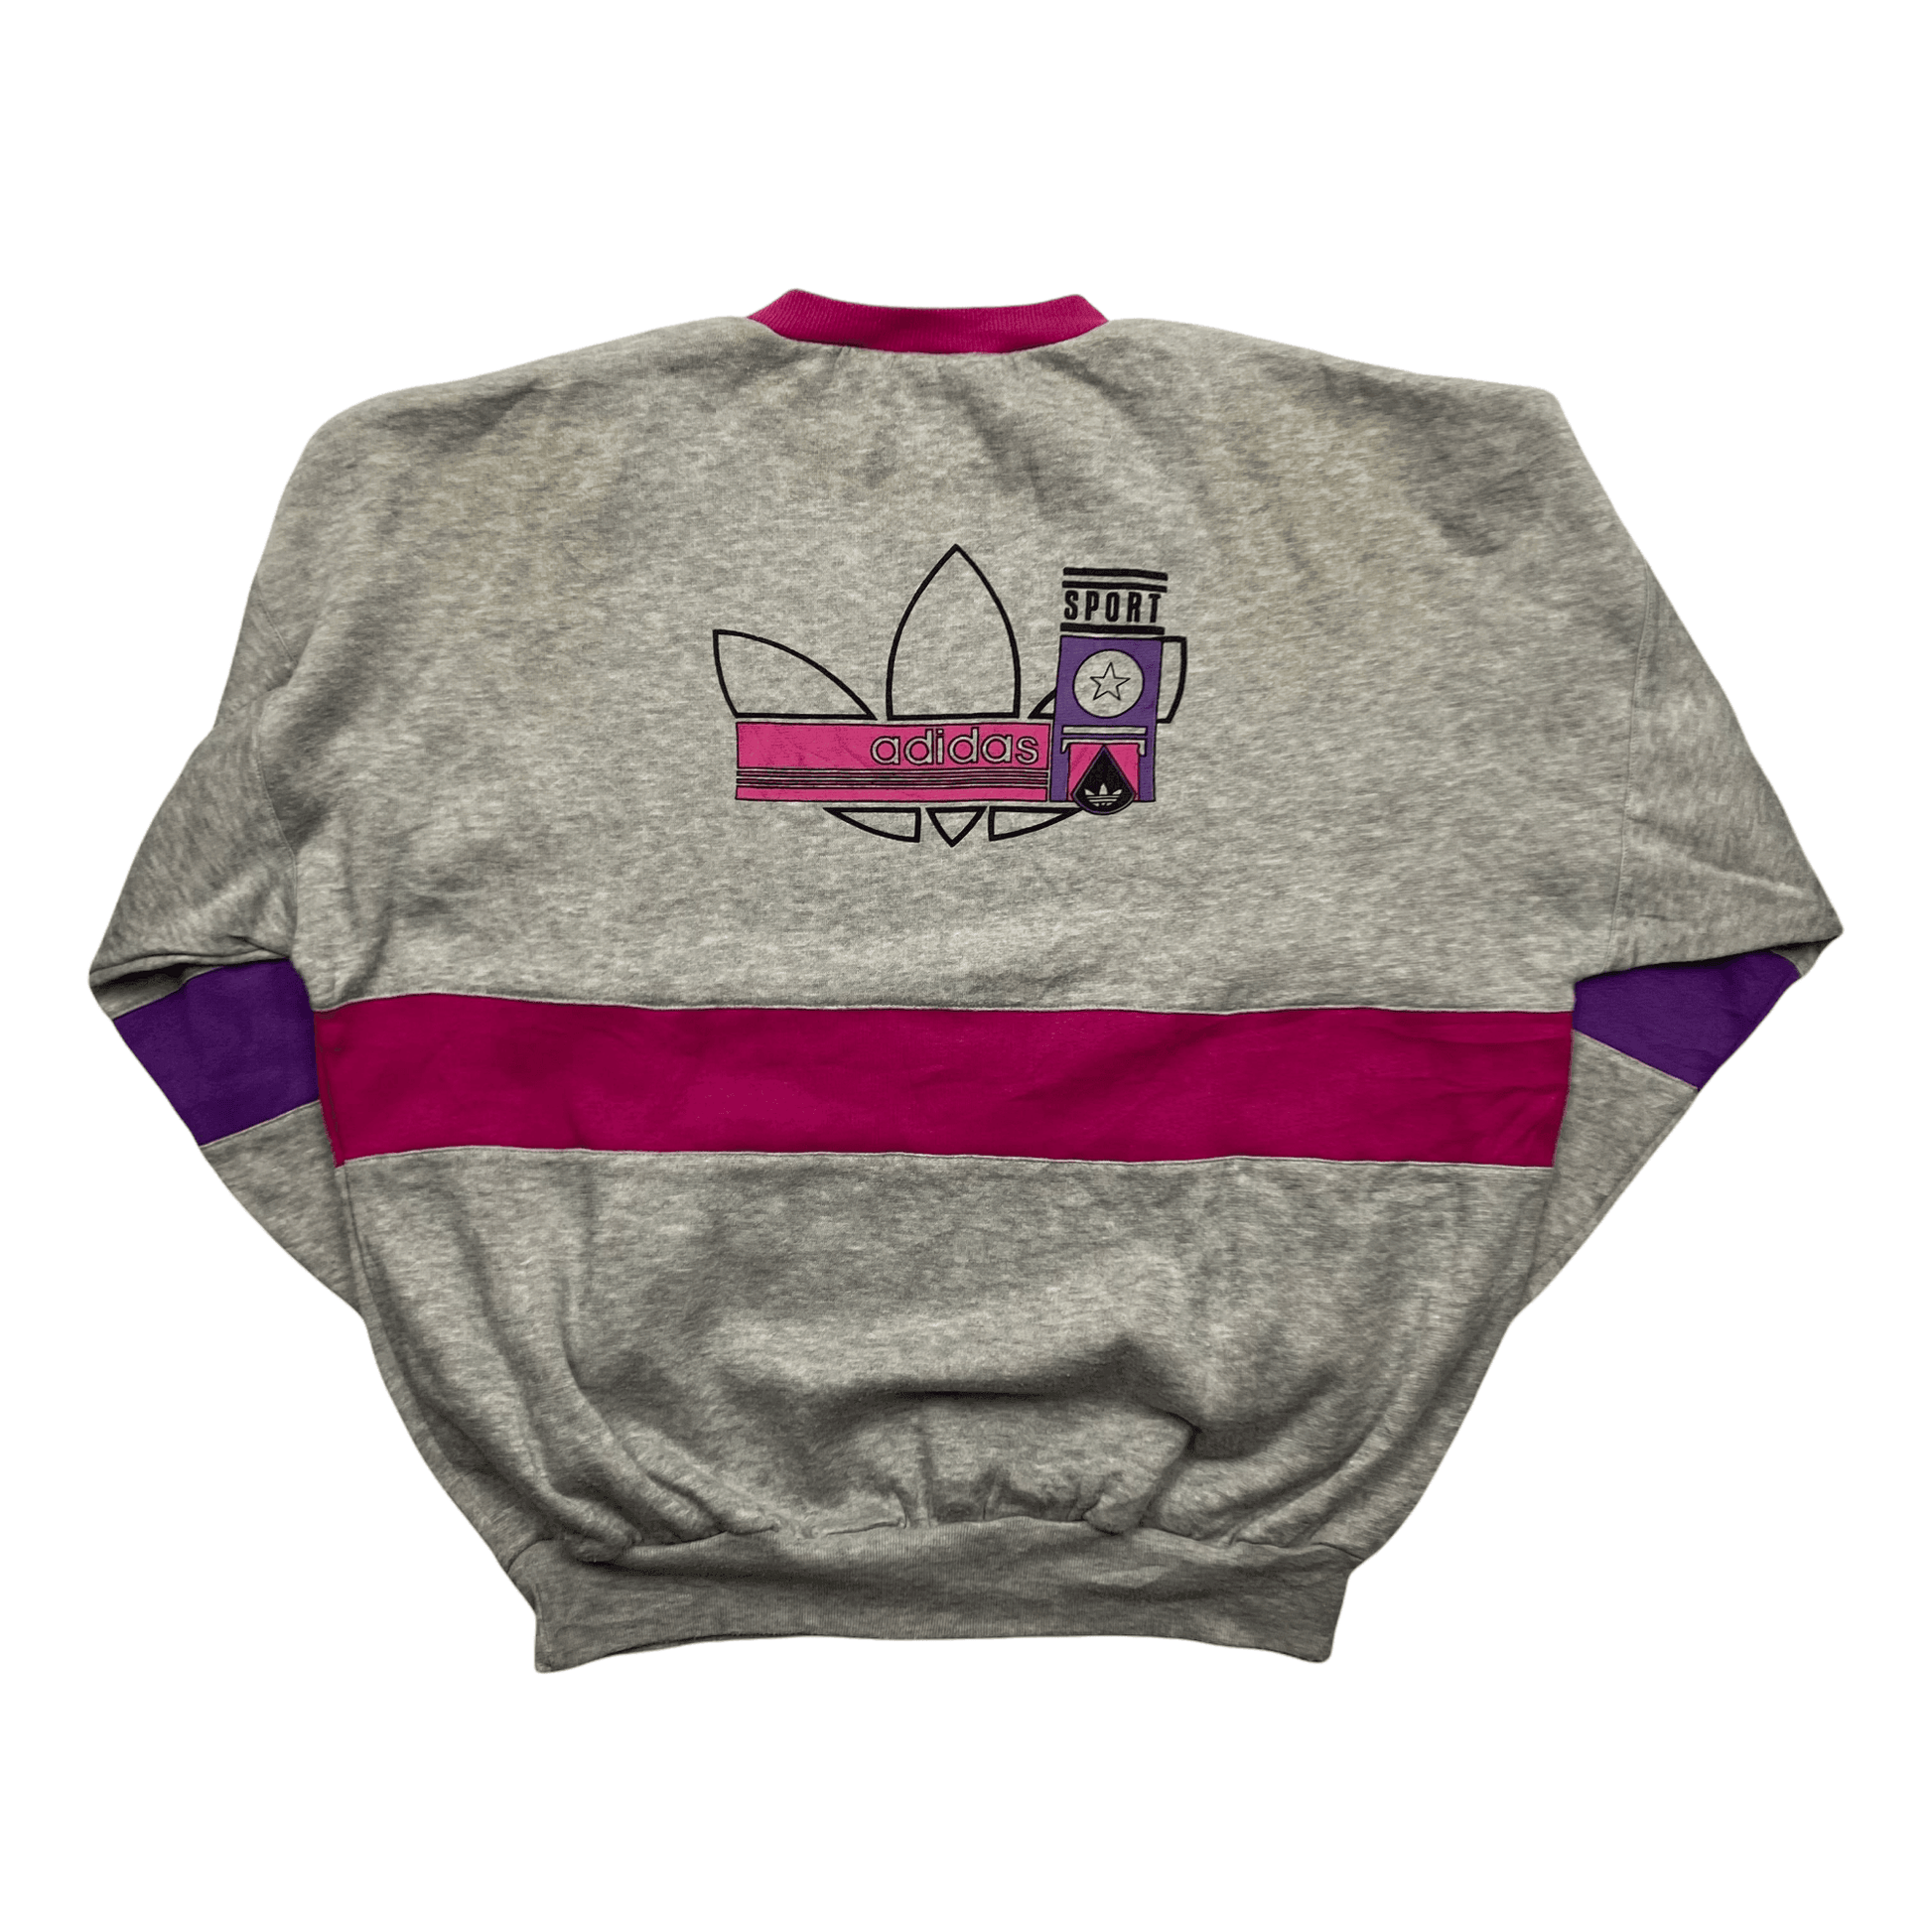 Vintage 90s Grey, Purple + Pink Adidas Spell-Out Sweatshirt - Large - The Streetwear Studio